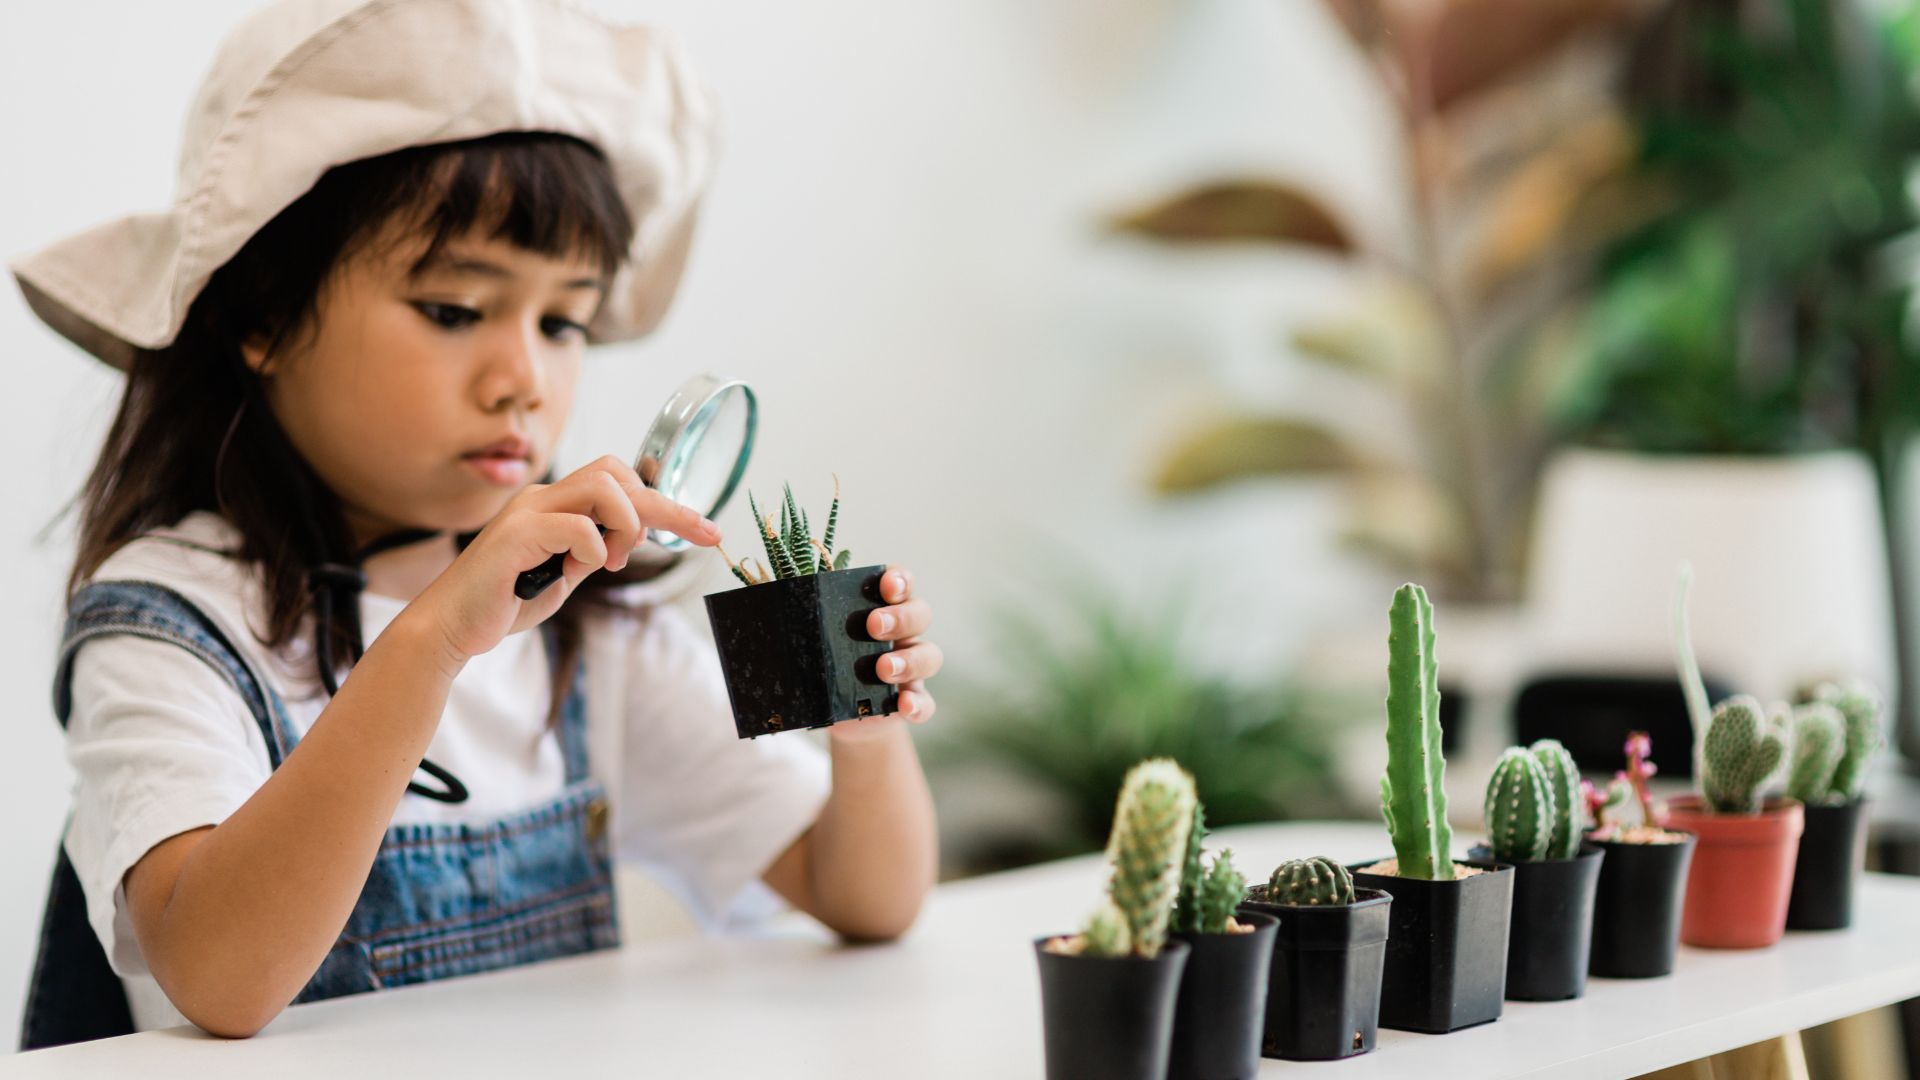 young girl examining plants